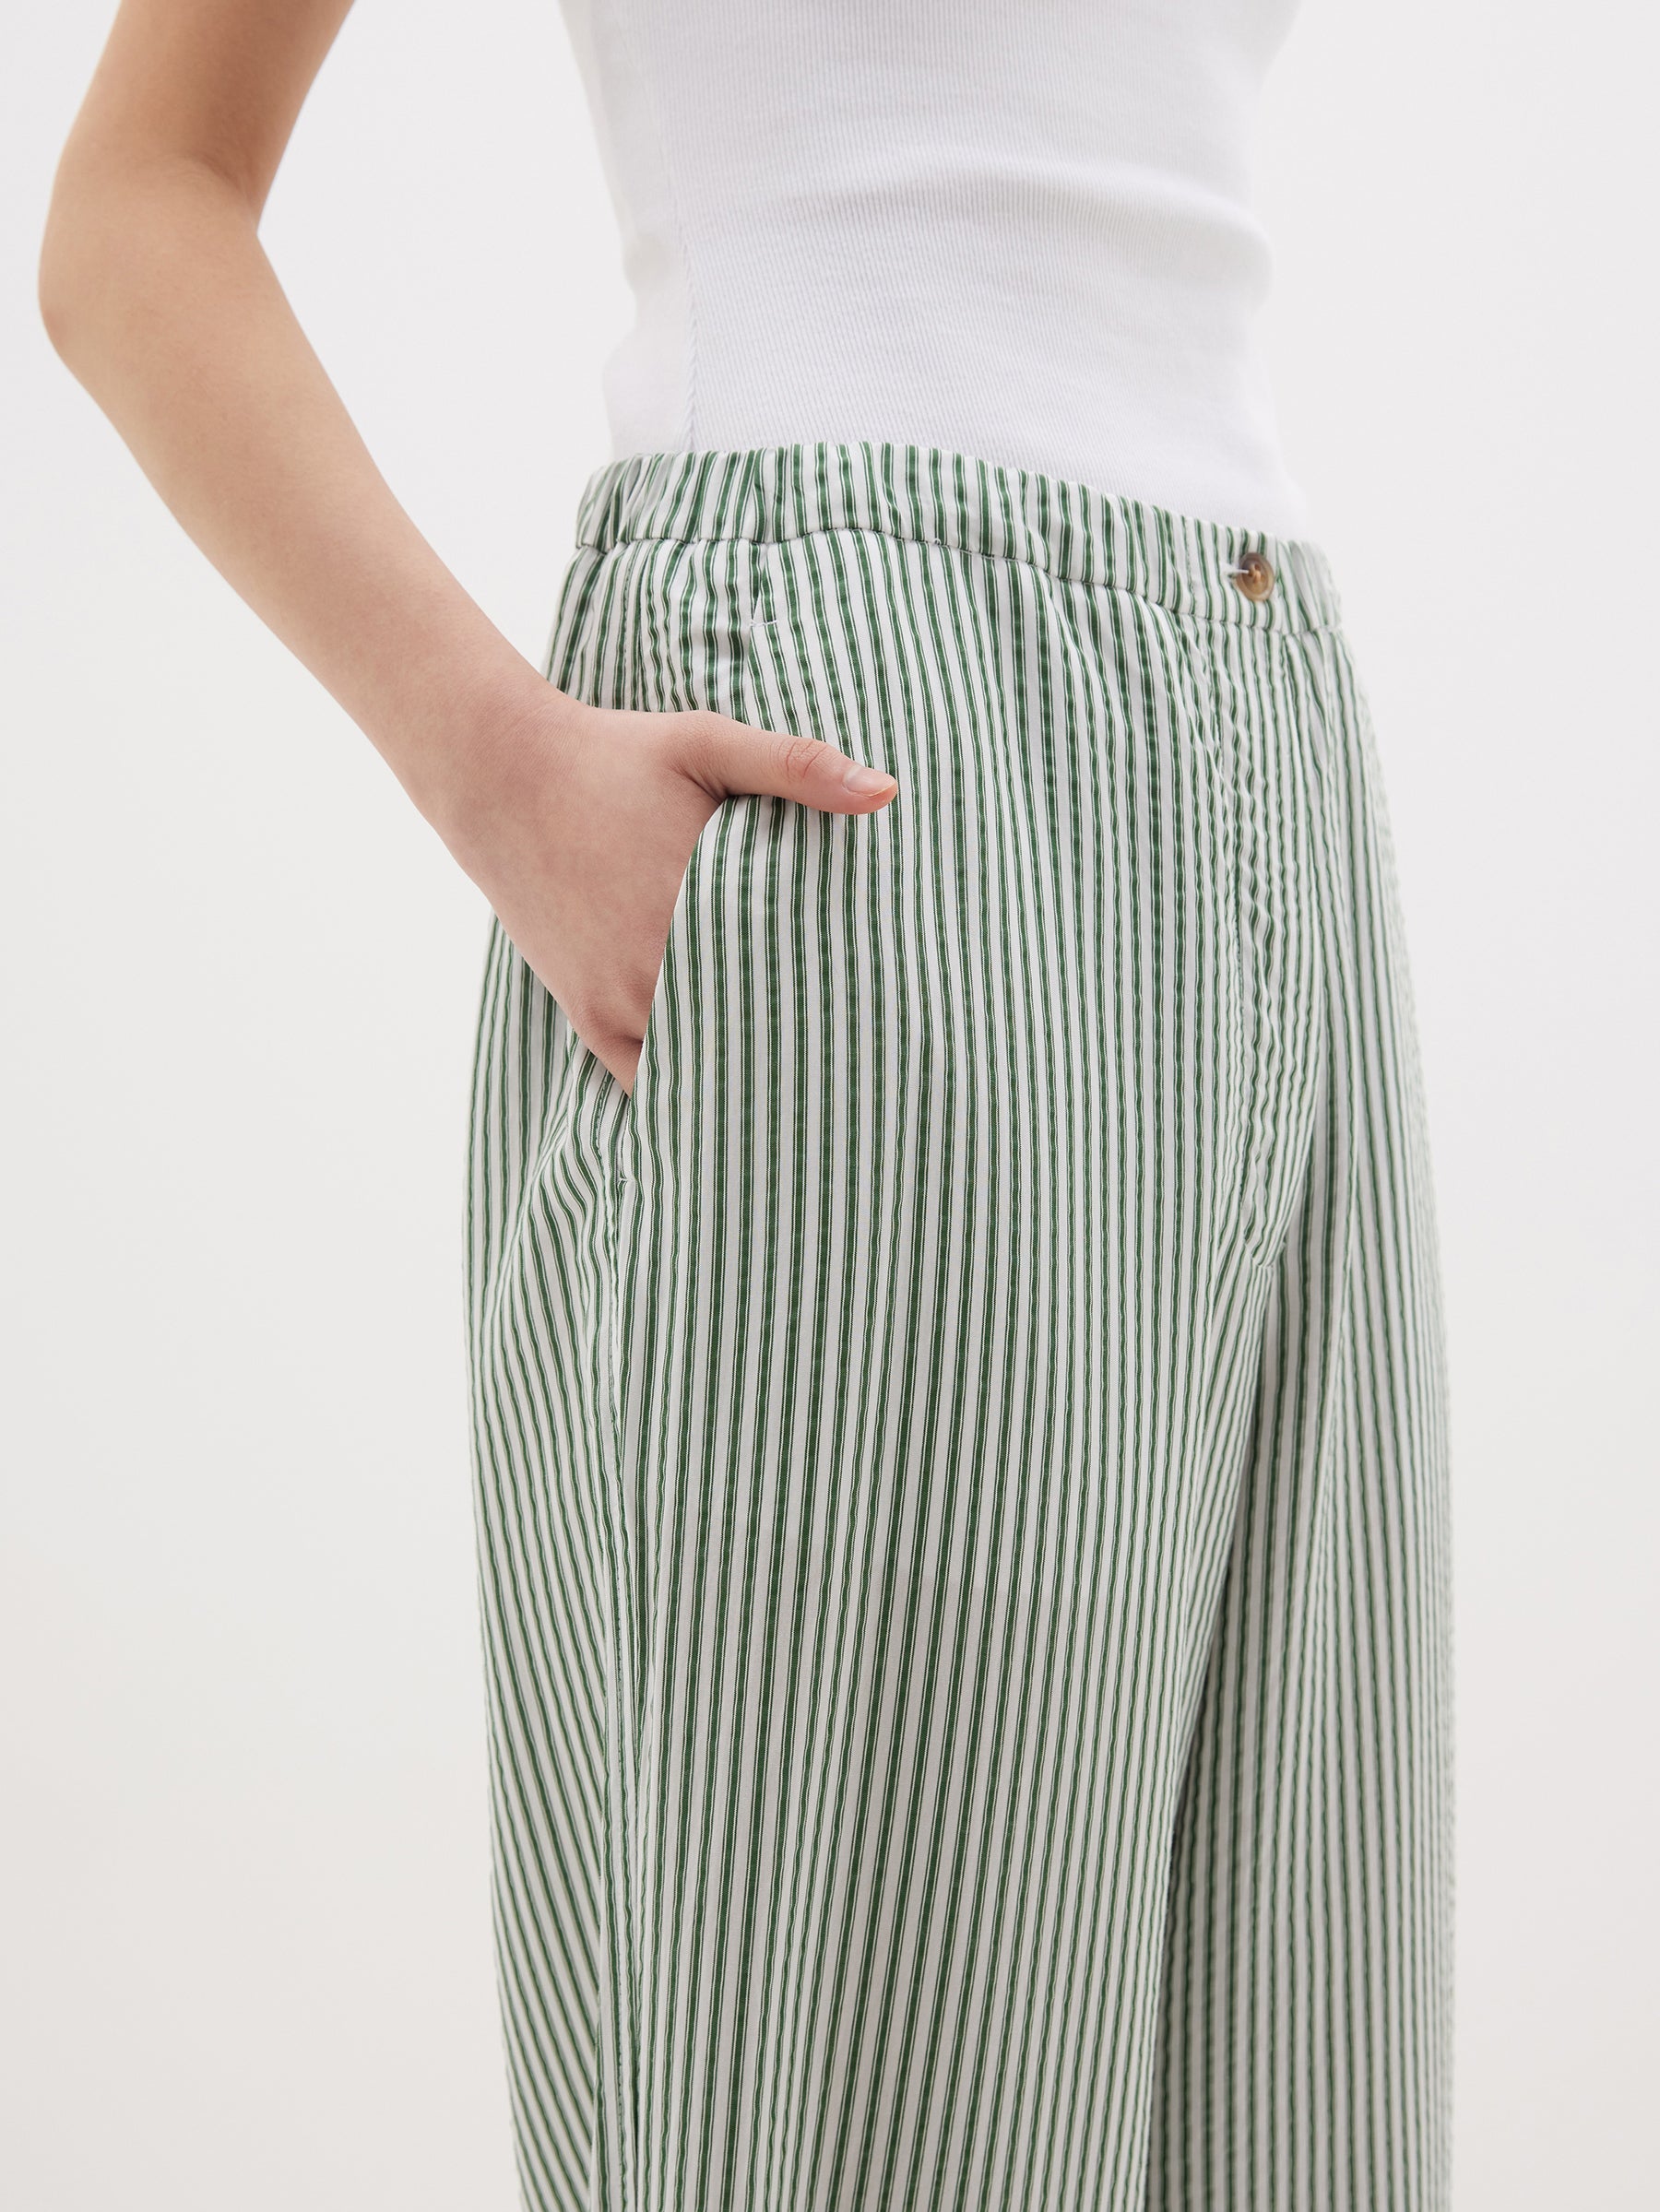 Bassike | Stripe Summer Pant - Green/White